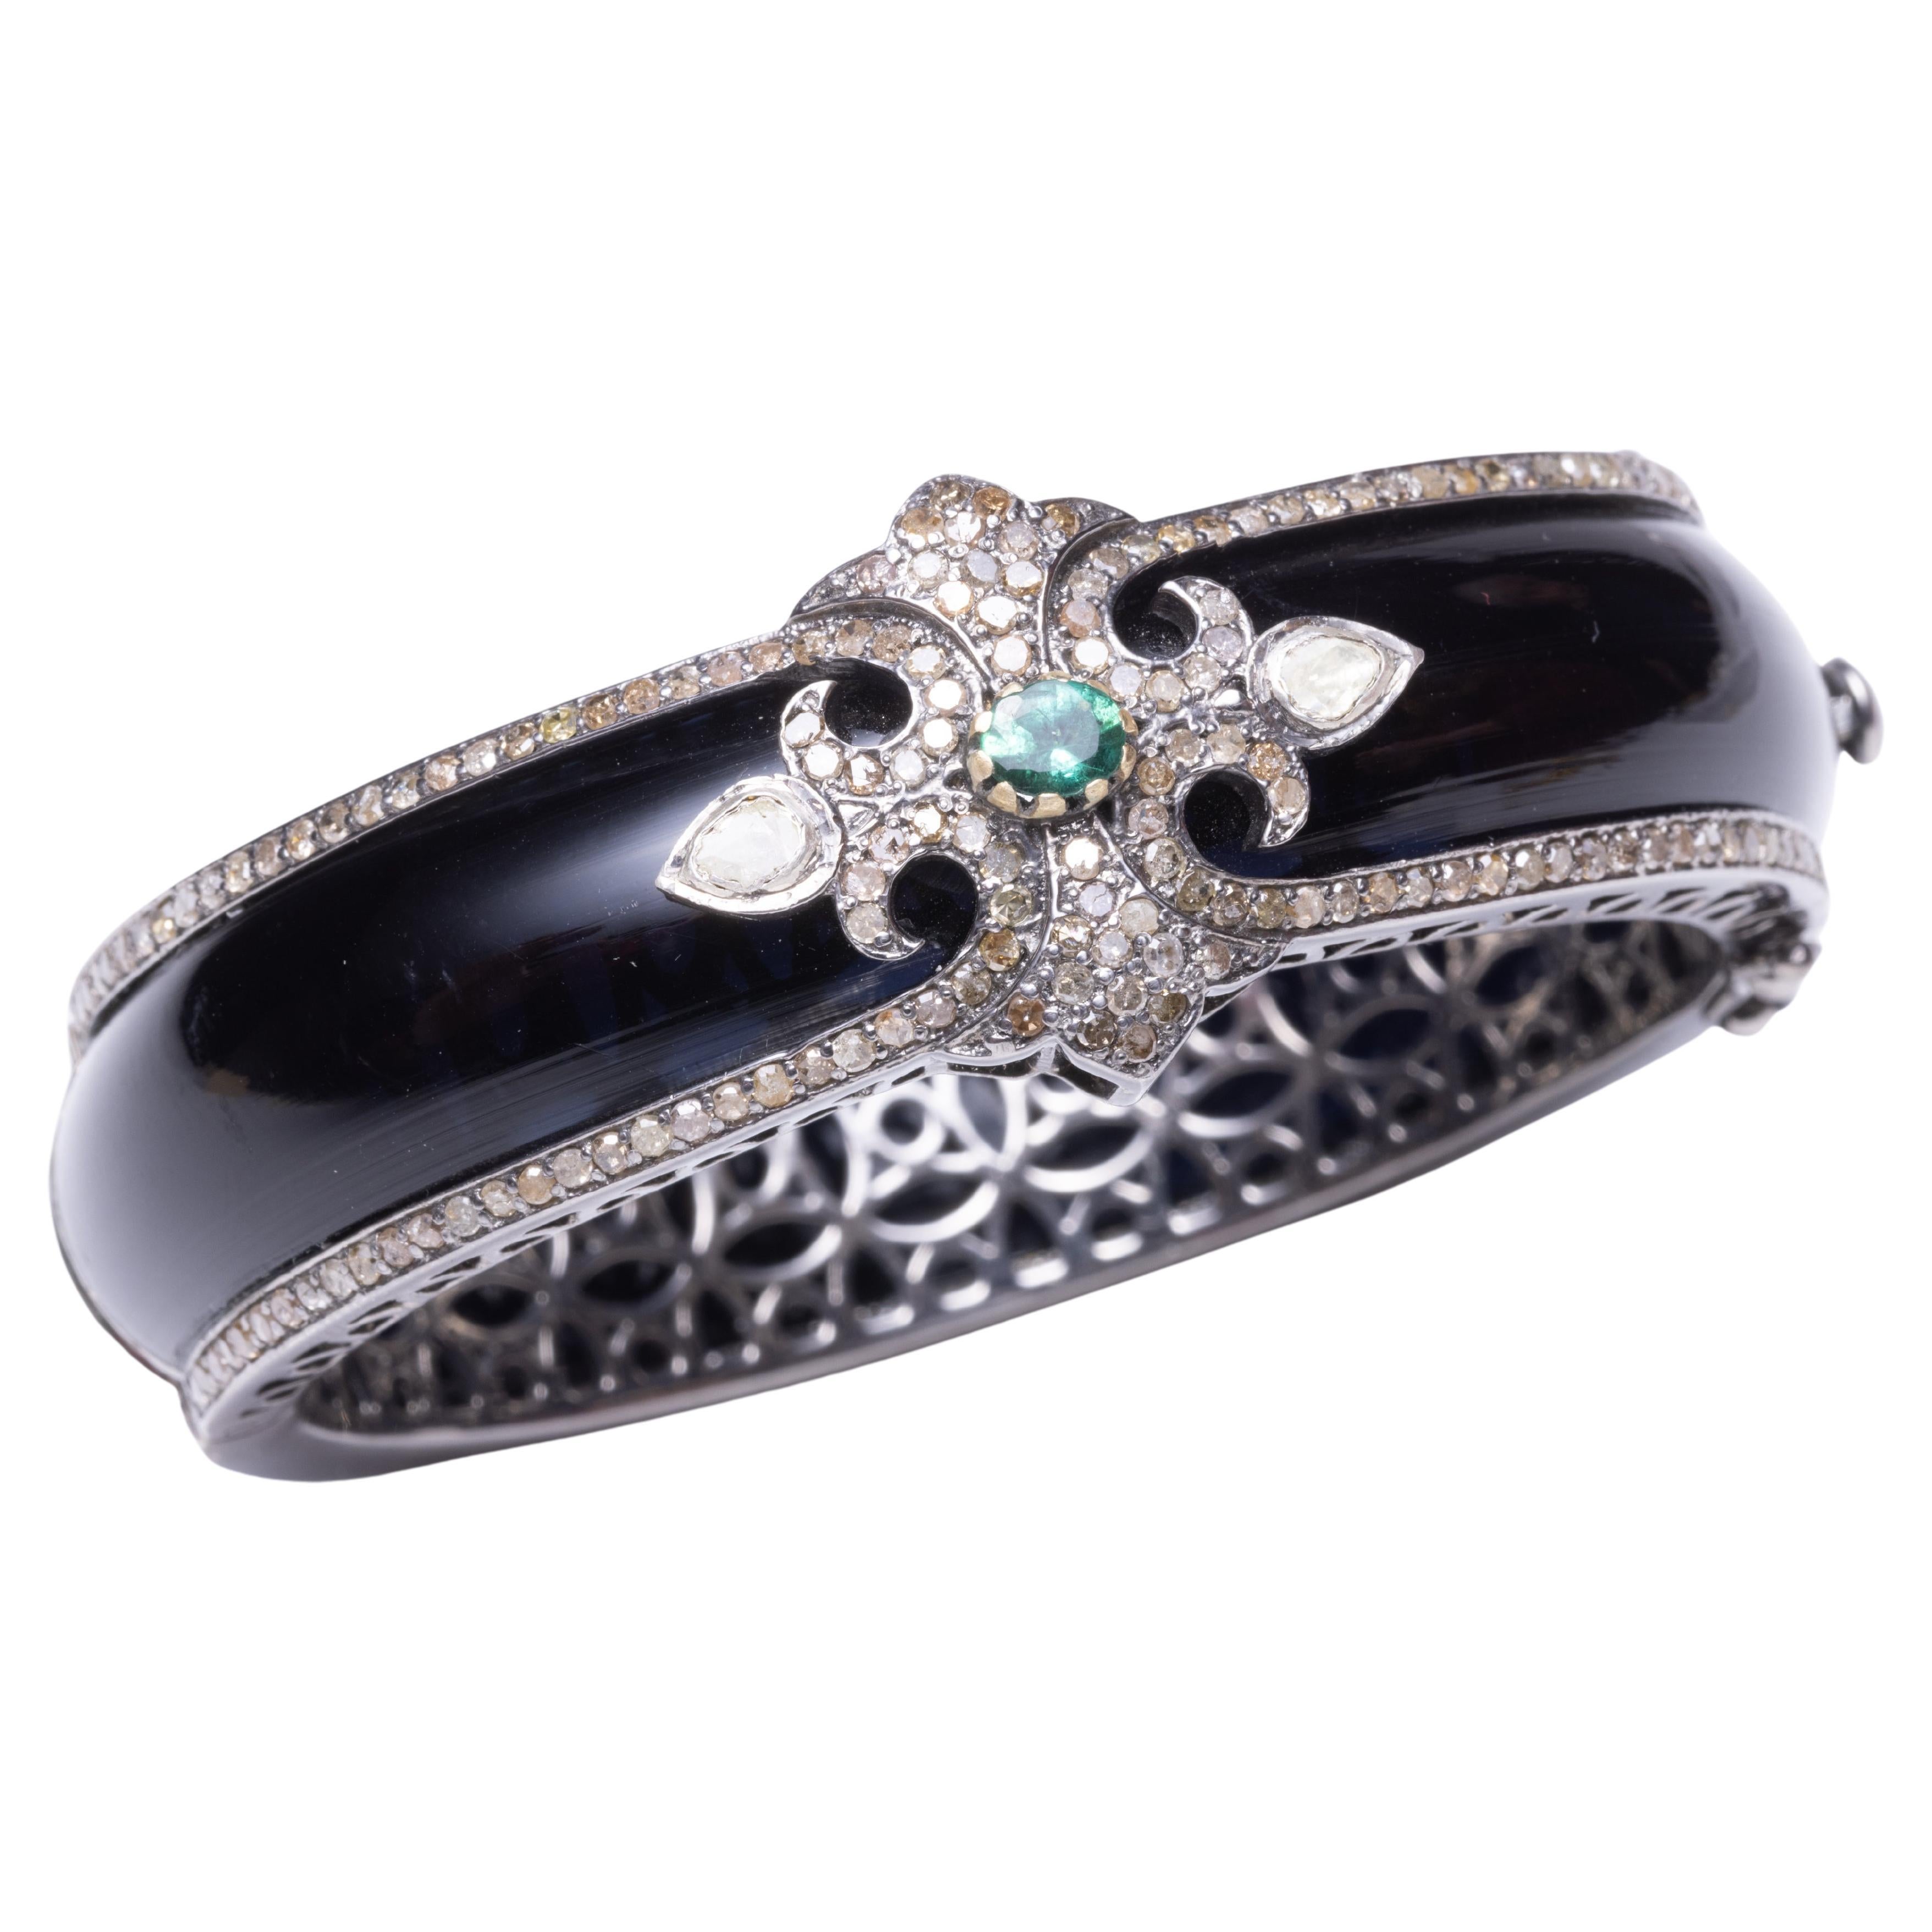 Black Bakelite Cuff Bracelet with Emerald and Diamonds